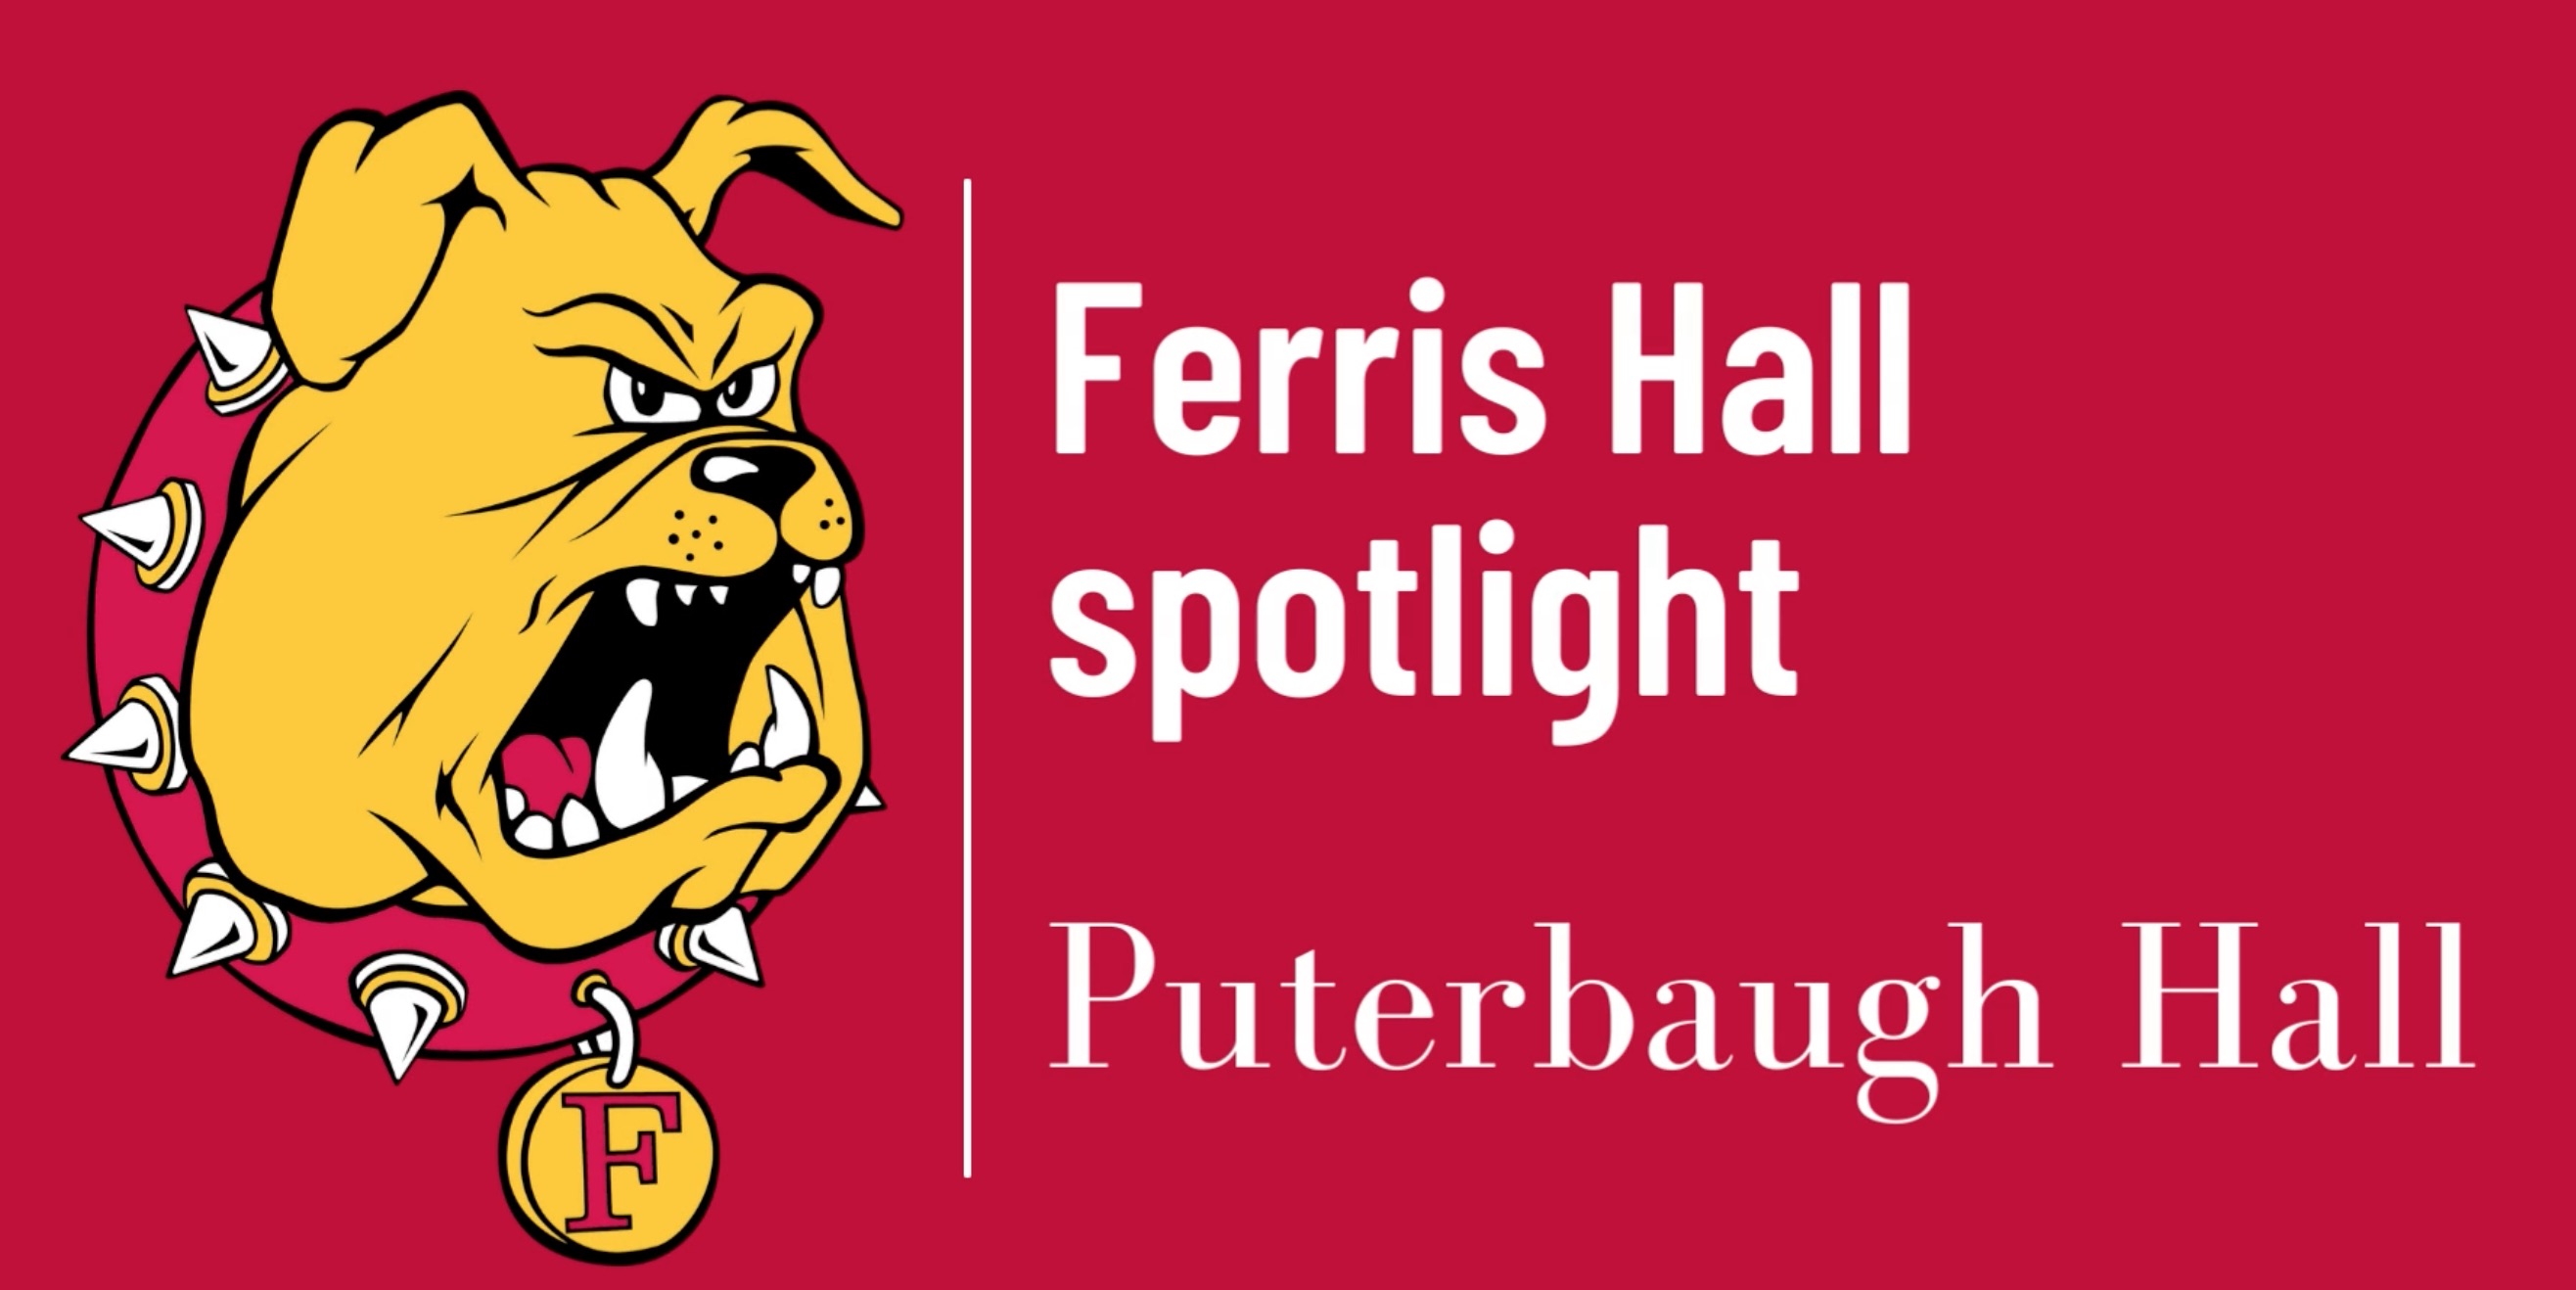 Puterbaugh Hall Spotlight